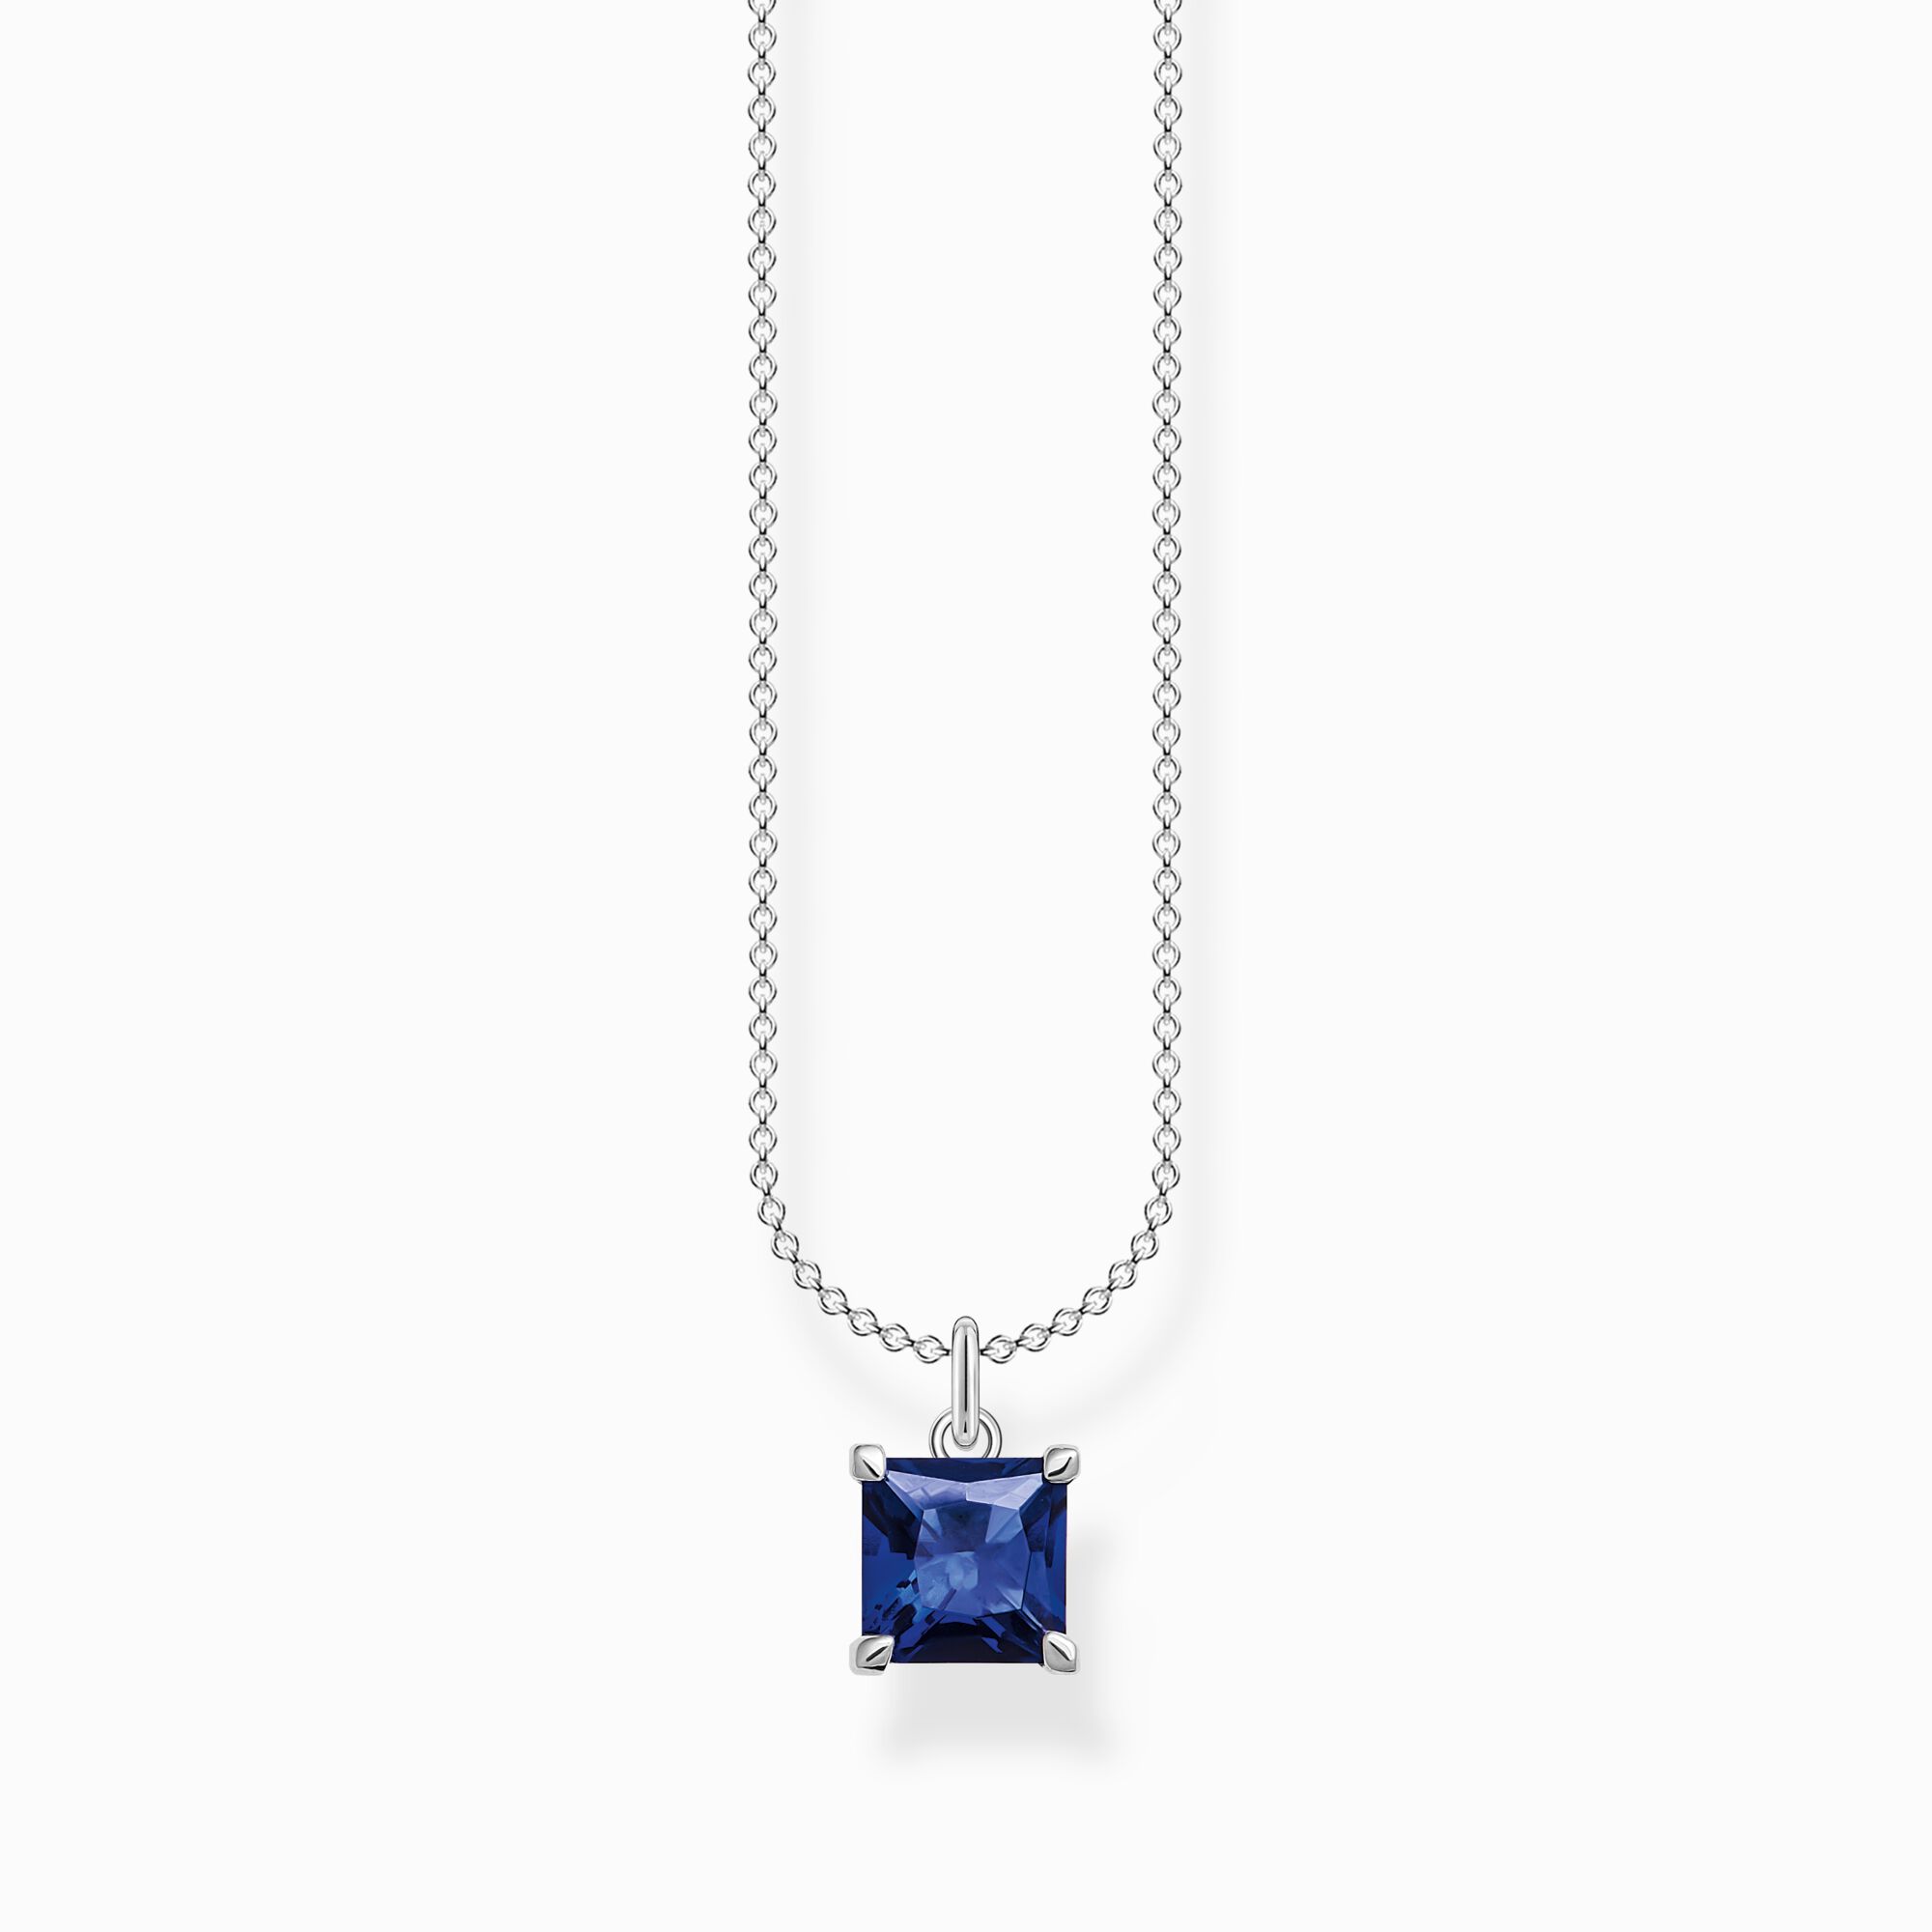 Necklace with pendant, sapphire blue SABO – stone THOMAS